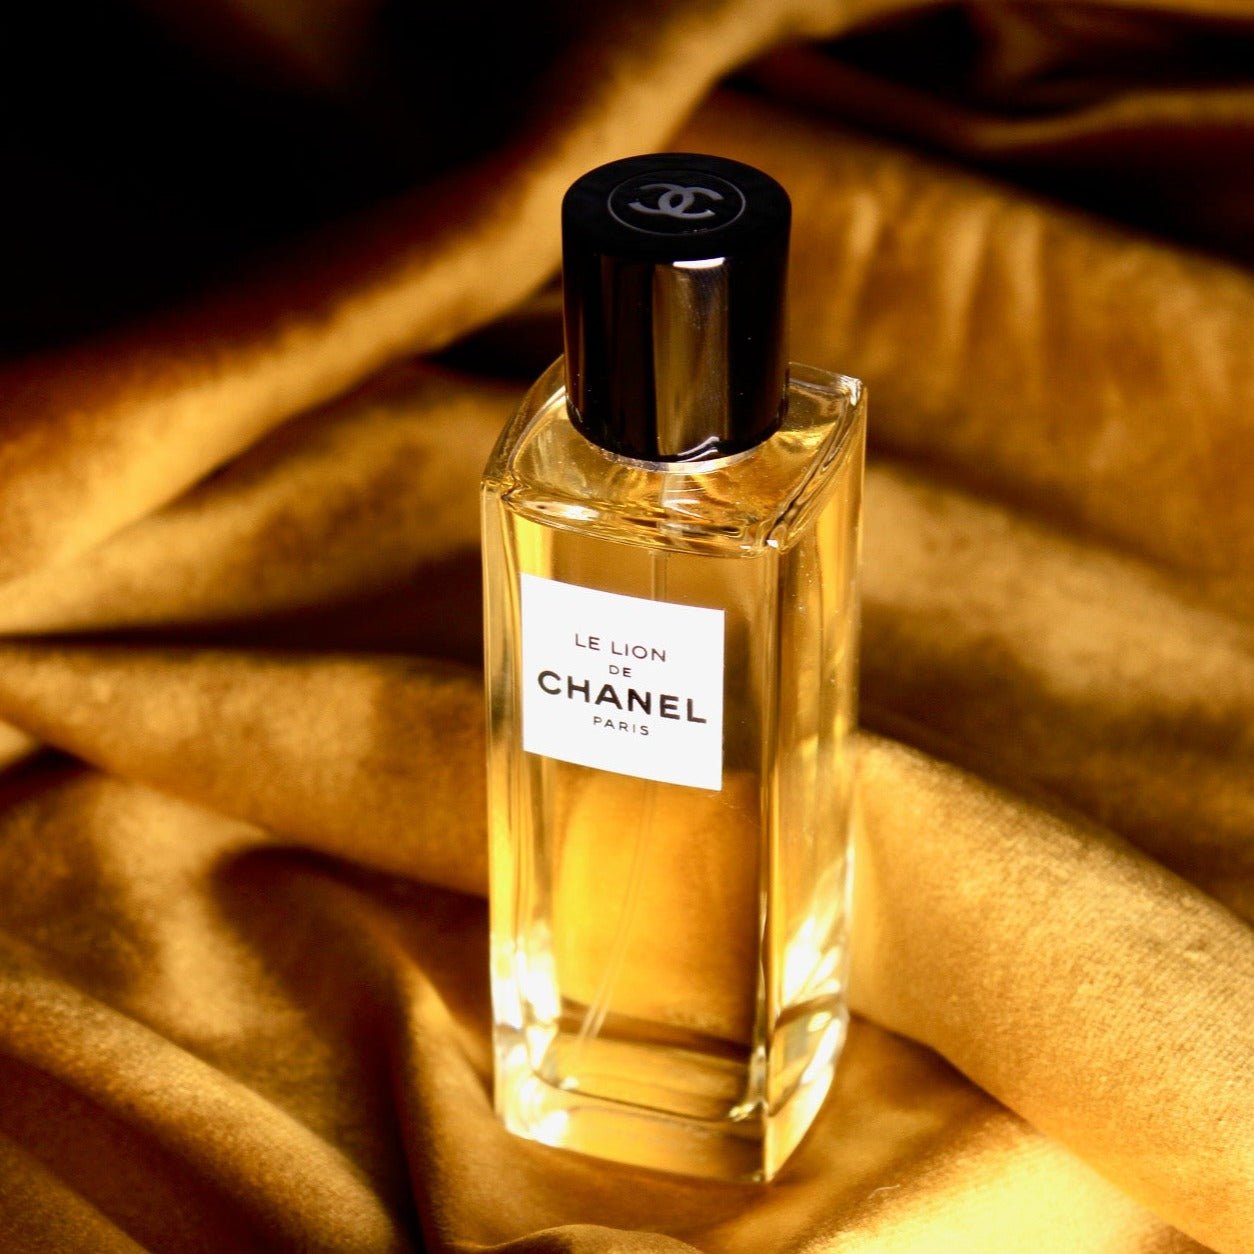 Chanel Boy EDP | My Perfume Shop Australia